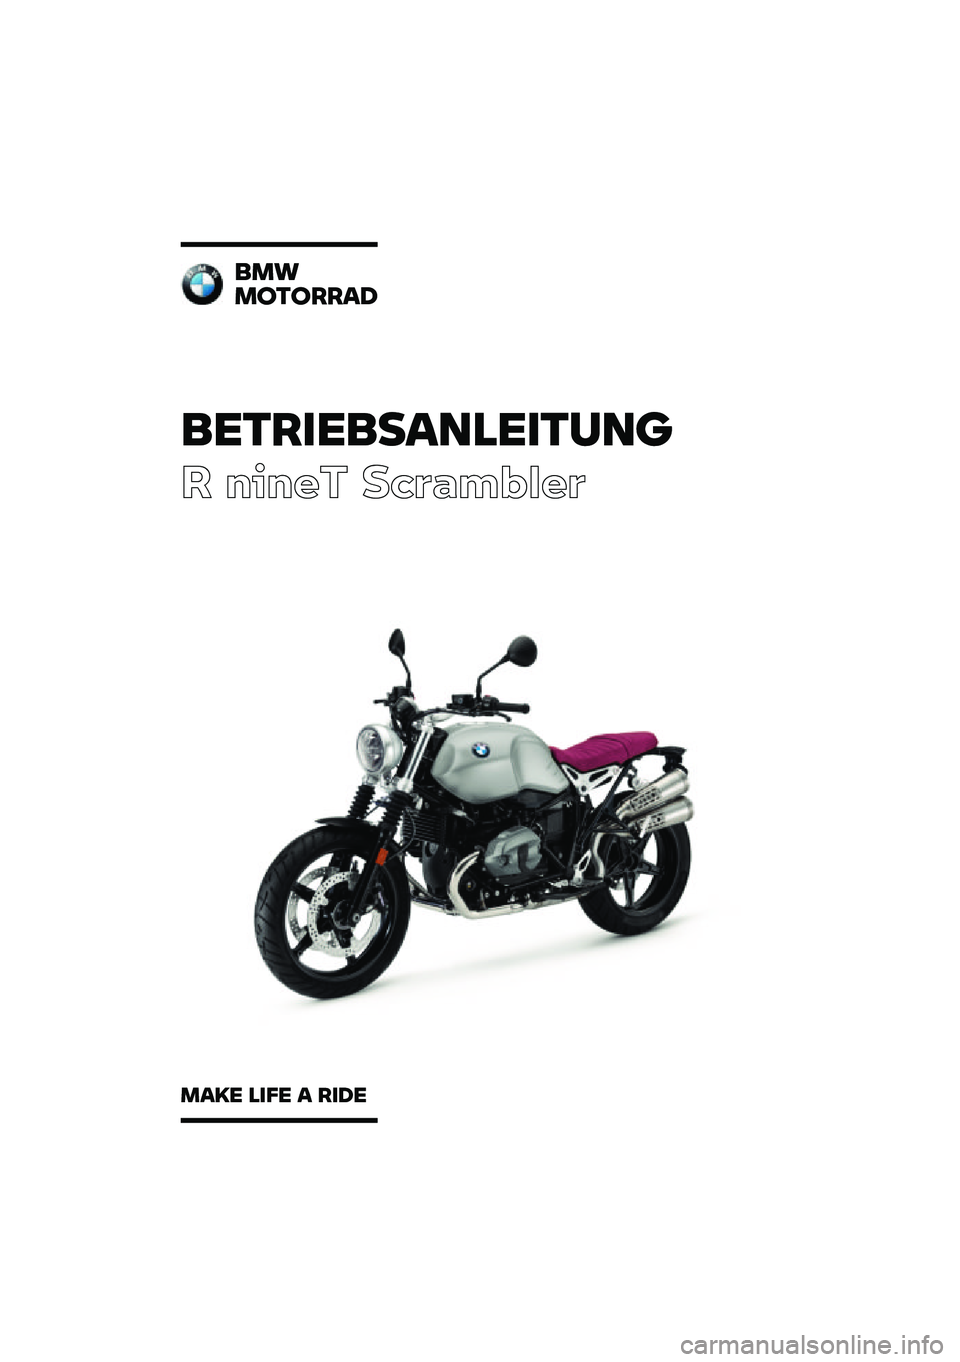 BMW MOTORRAD R NINE T SCRAMBLER 2020  Betriebsanleitung (in German) ���������\b�	�
�����	�\f
� ����� ��\b�	�
��\f�
��	
��
�
�
������\b�
�
�\b�� �
��� �\b ���� 